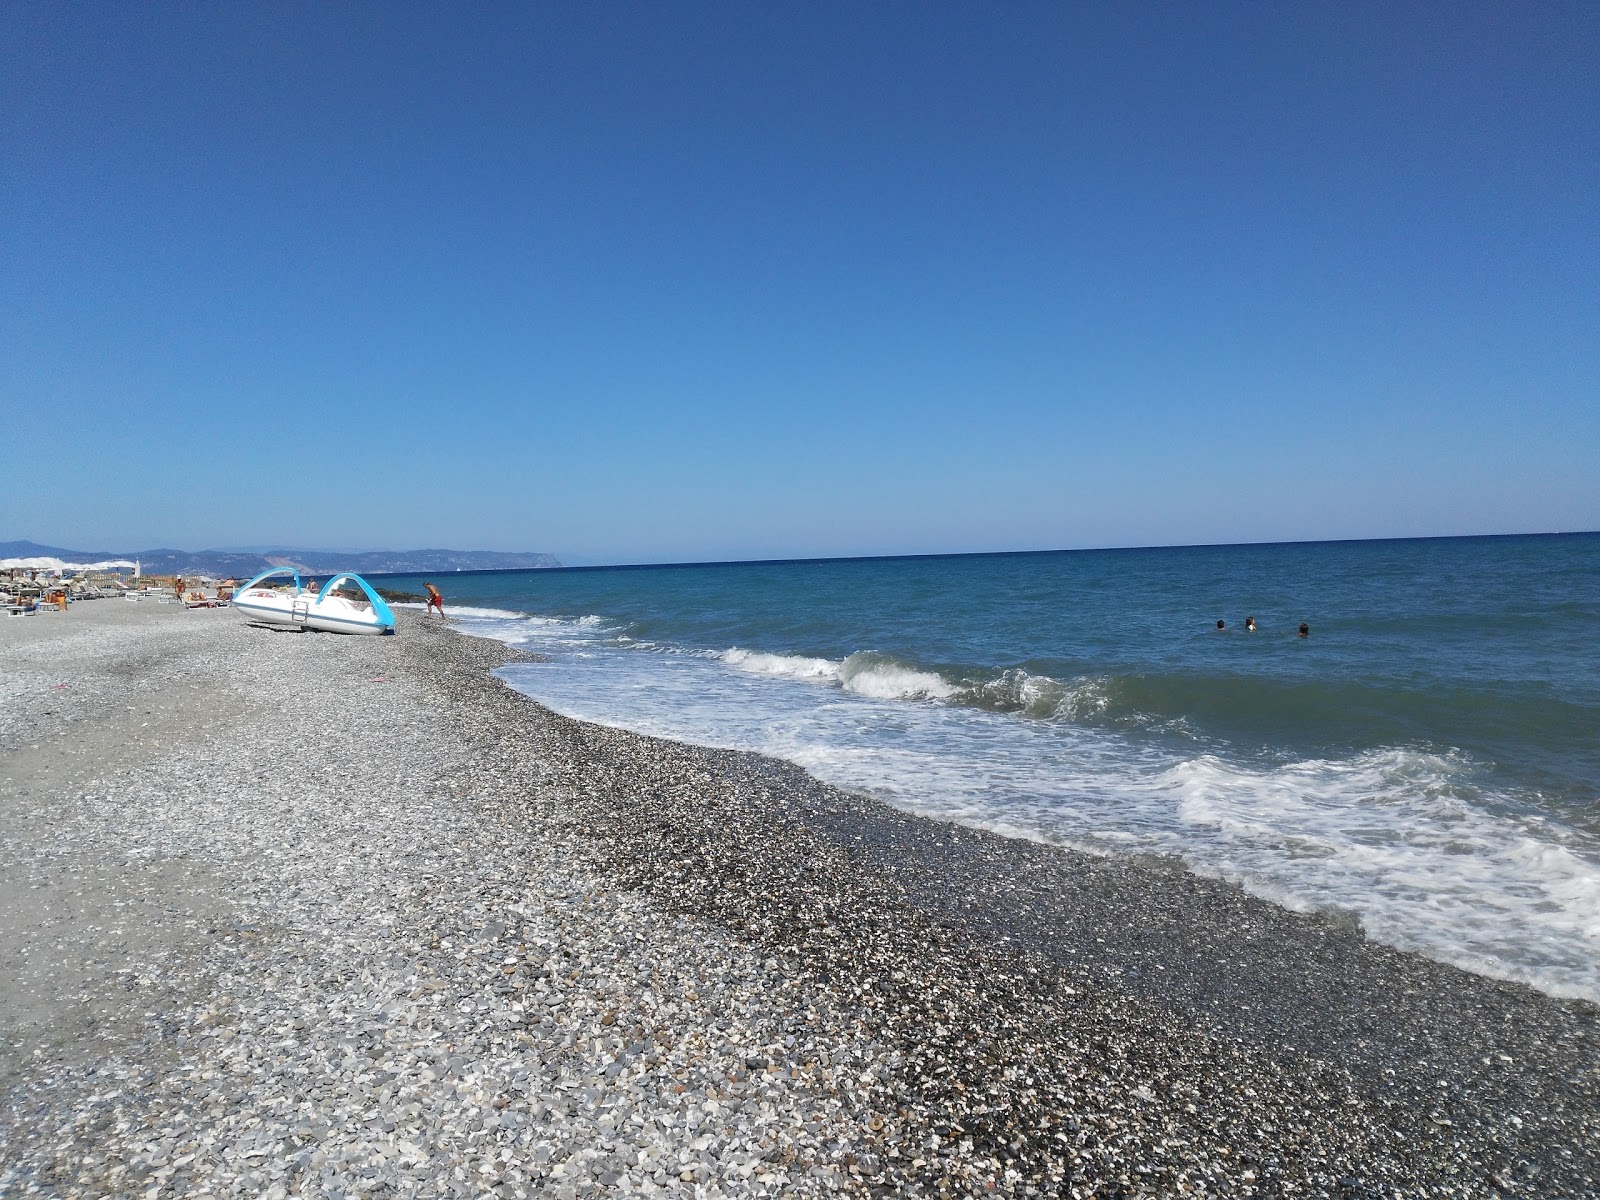 Fotografie cu Doria beach cu o suprafață de apa albastra